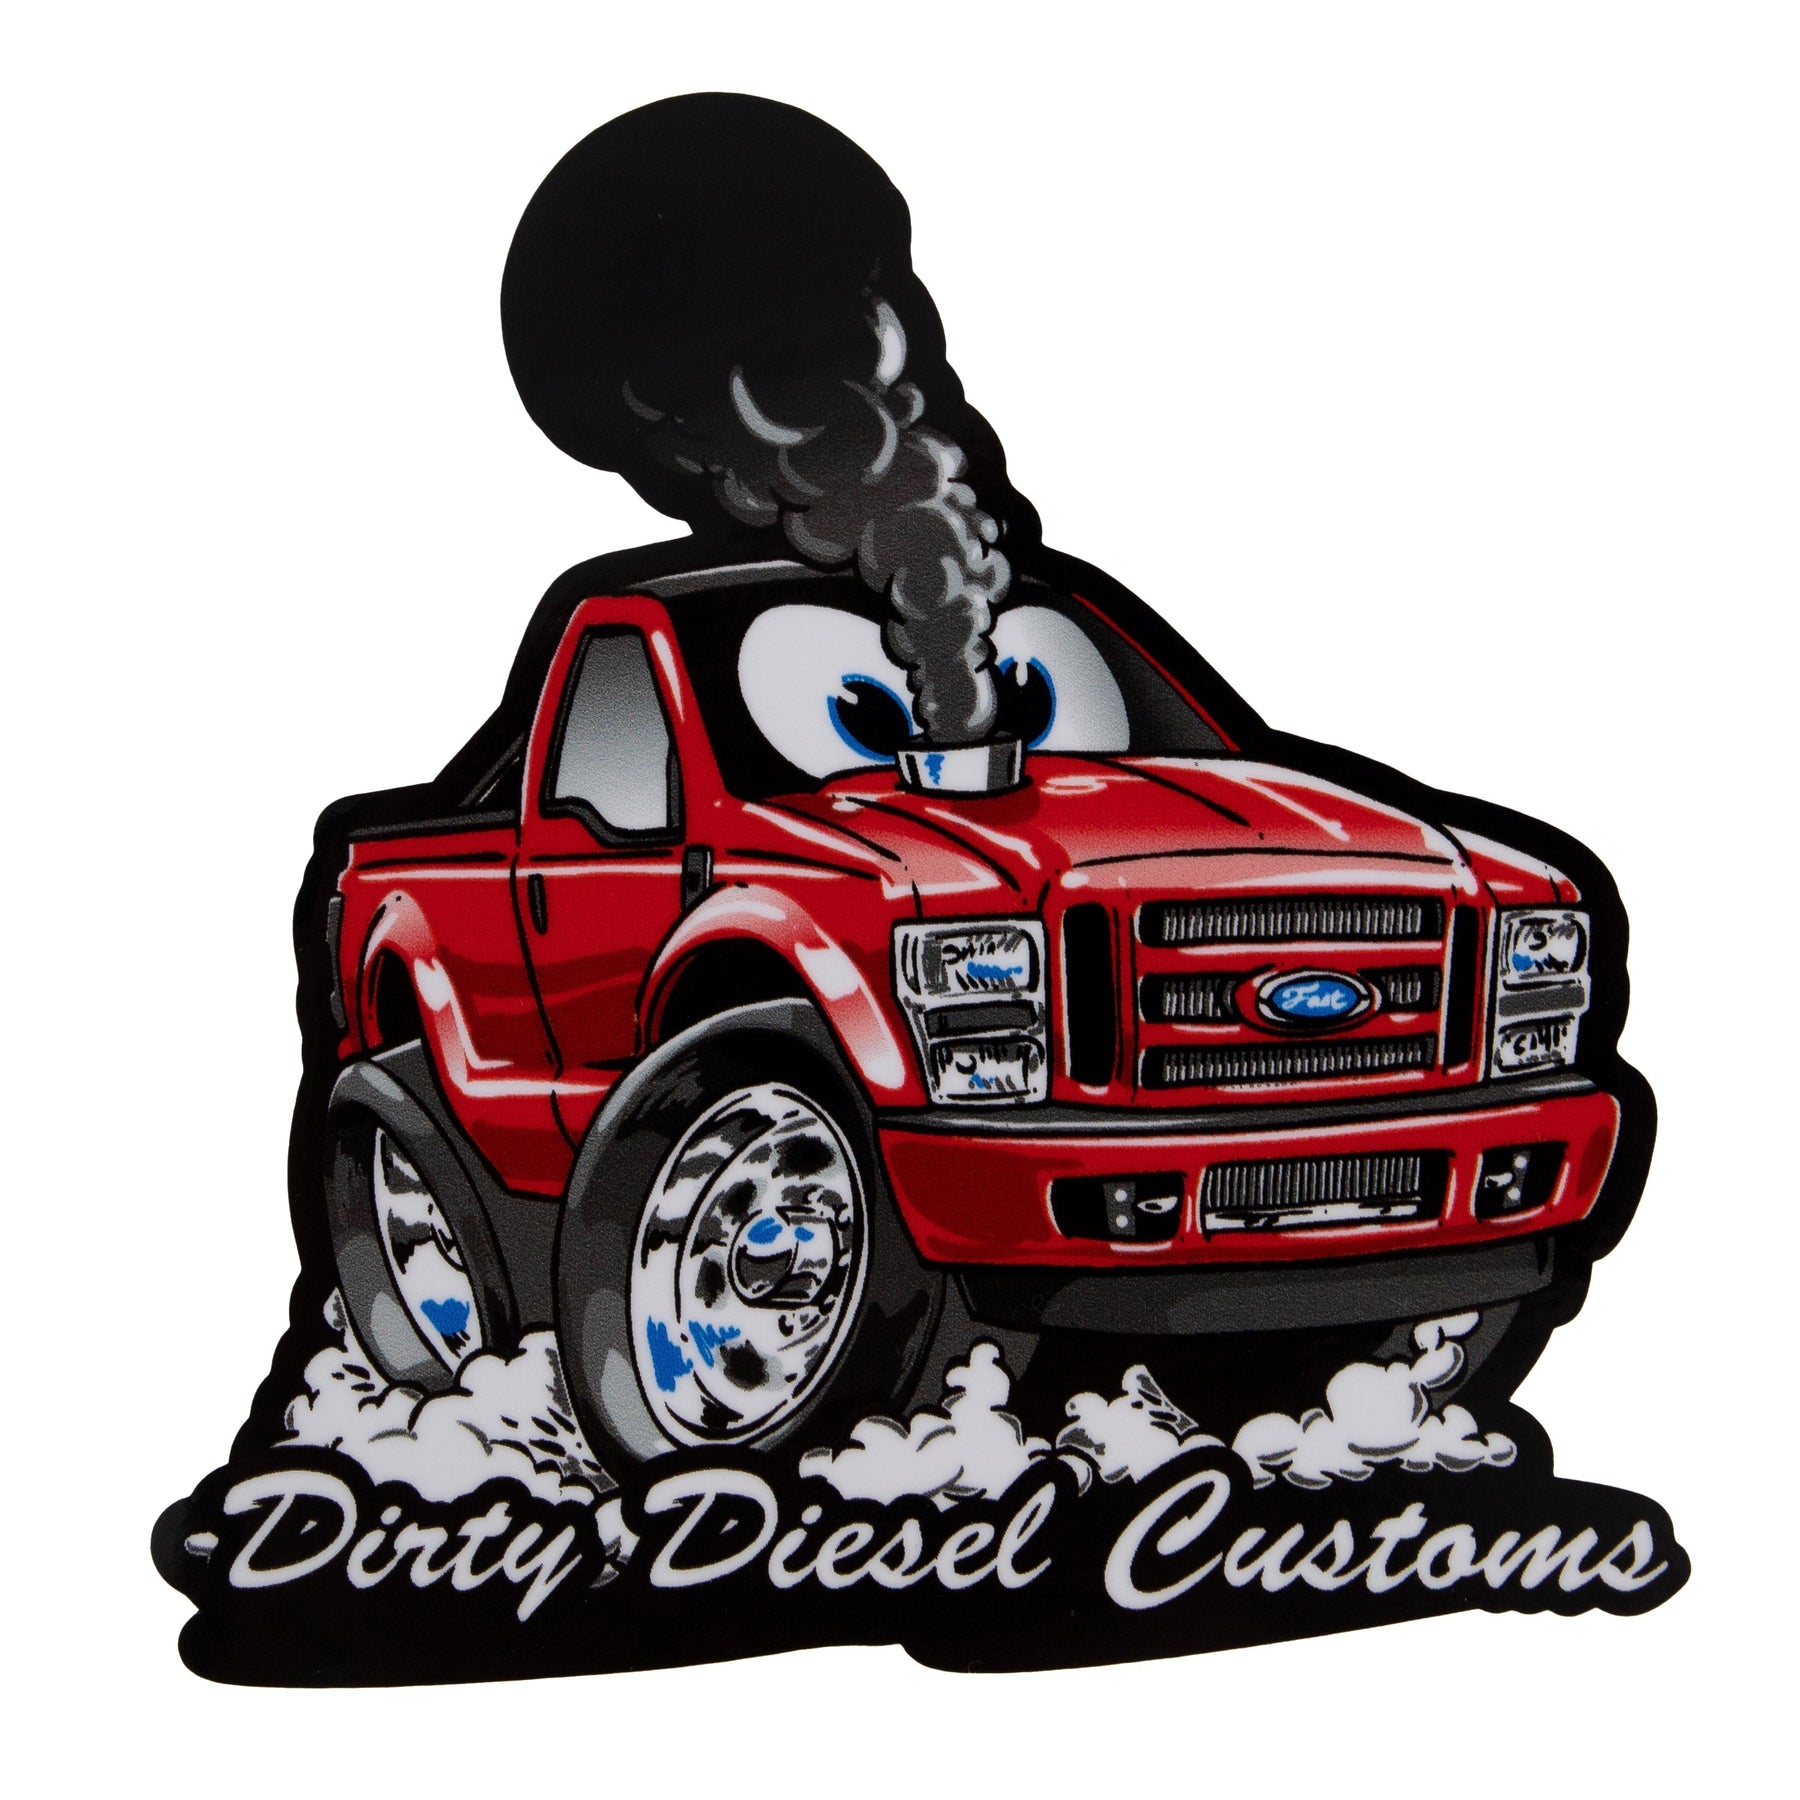 Dirty Diesel Cartoon Drag Truck Stickers-Sticker-Dirty Diesel Customs-ddc-dt-cartoon-Dirty Diesel Customs